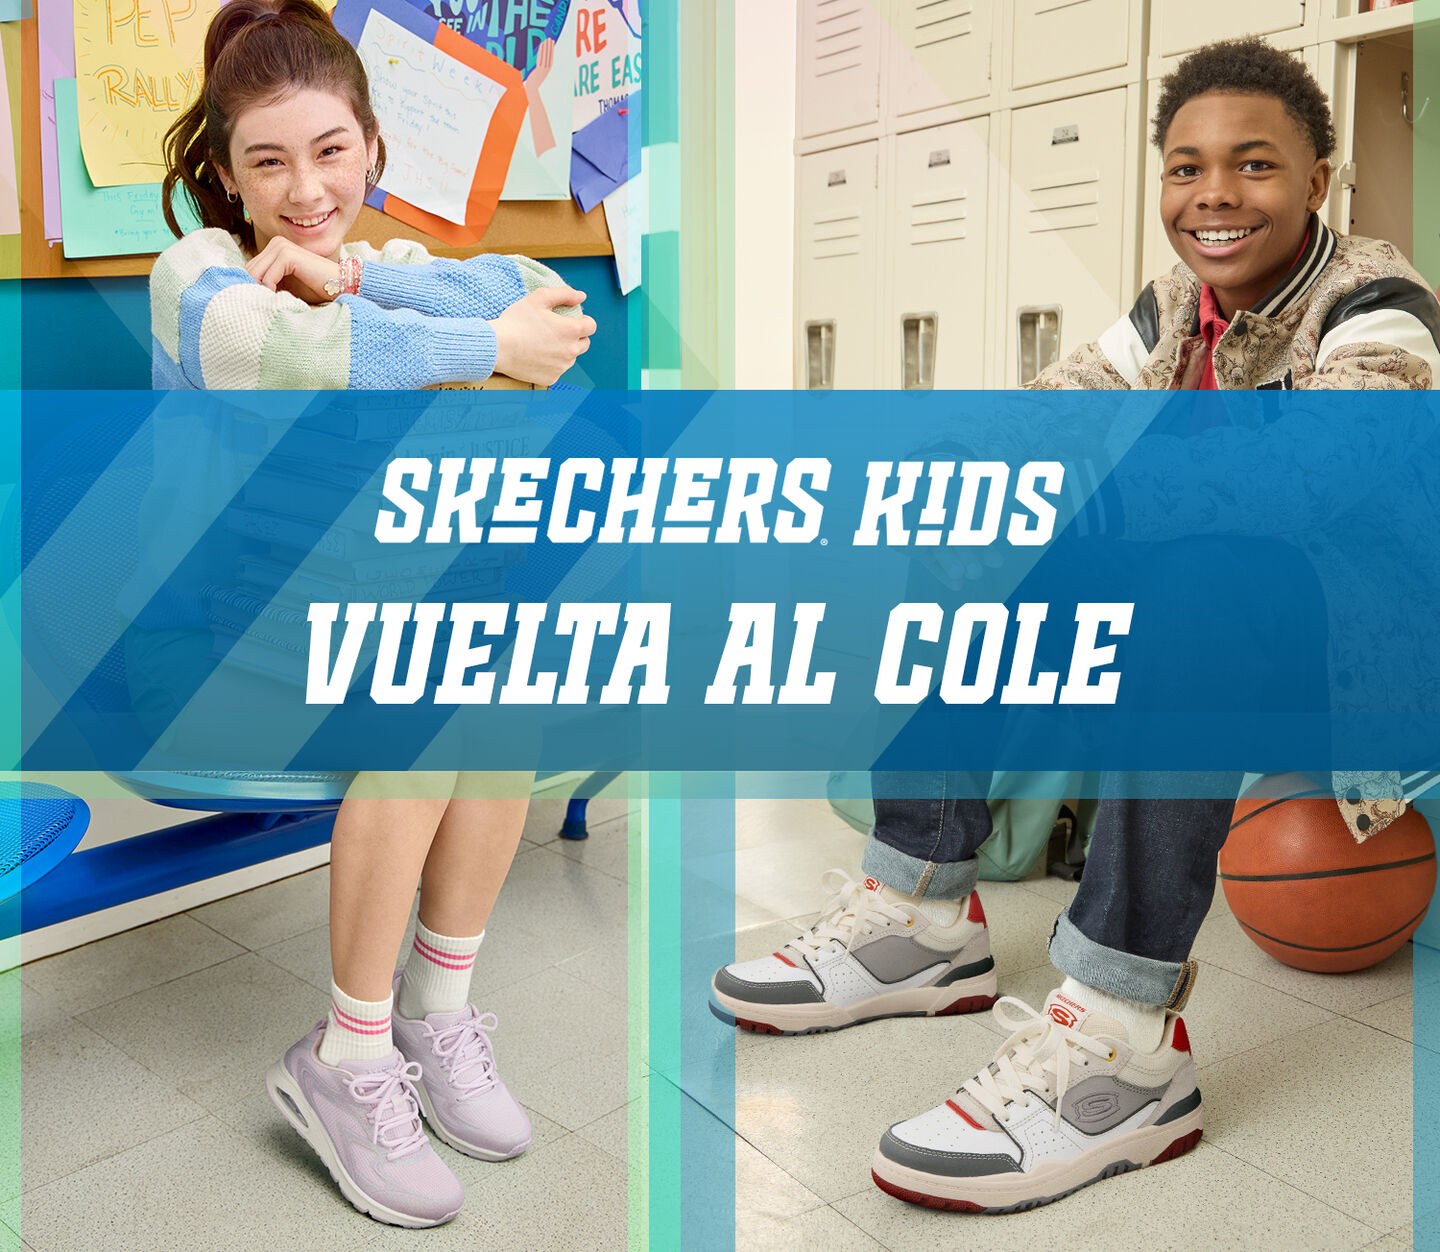 Skechers Kids Vuelta al Cole